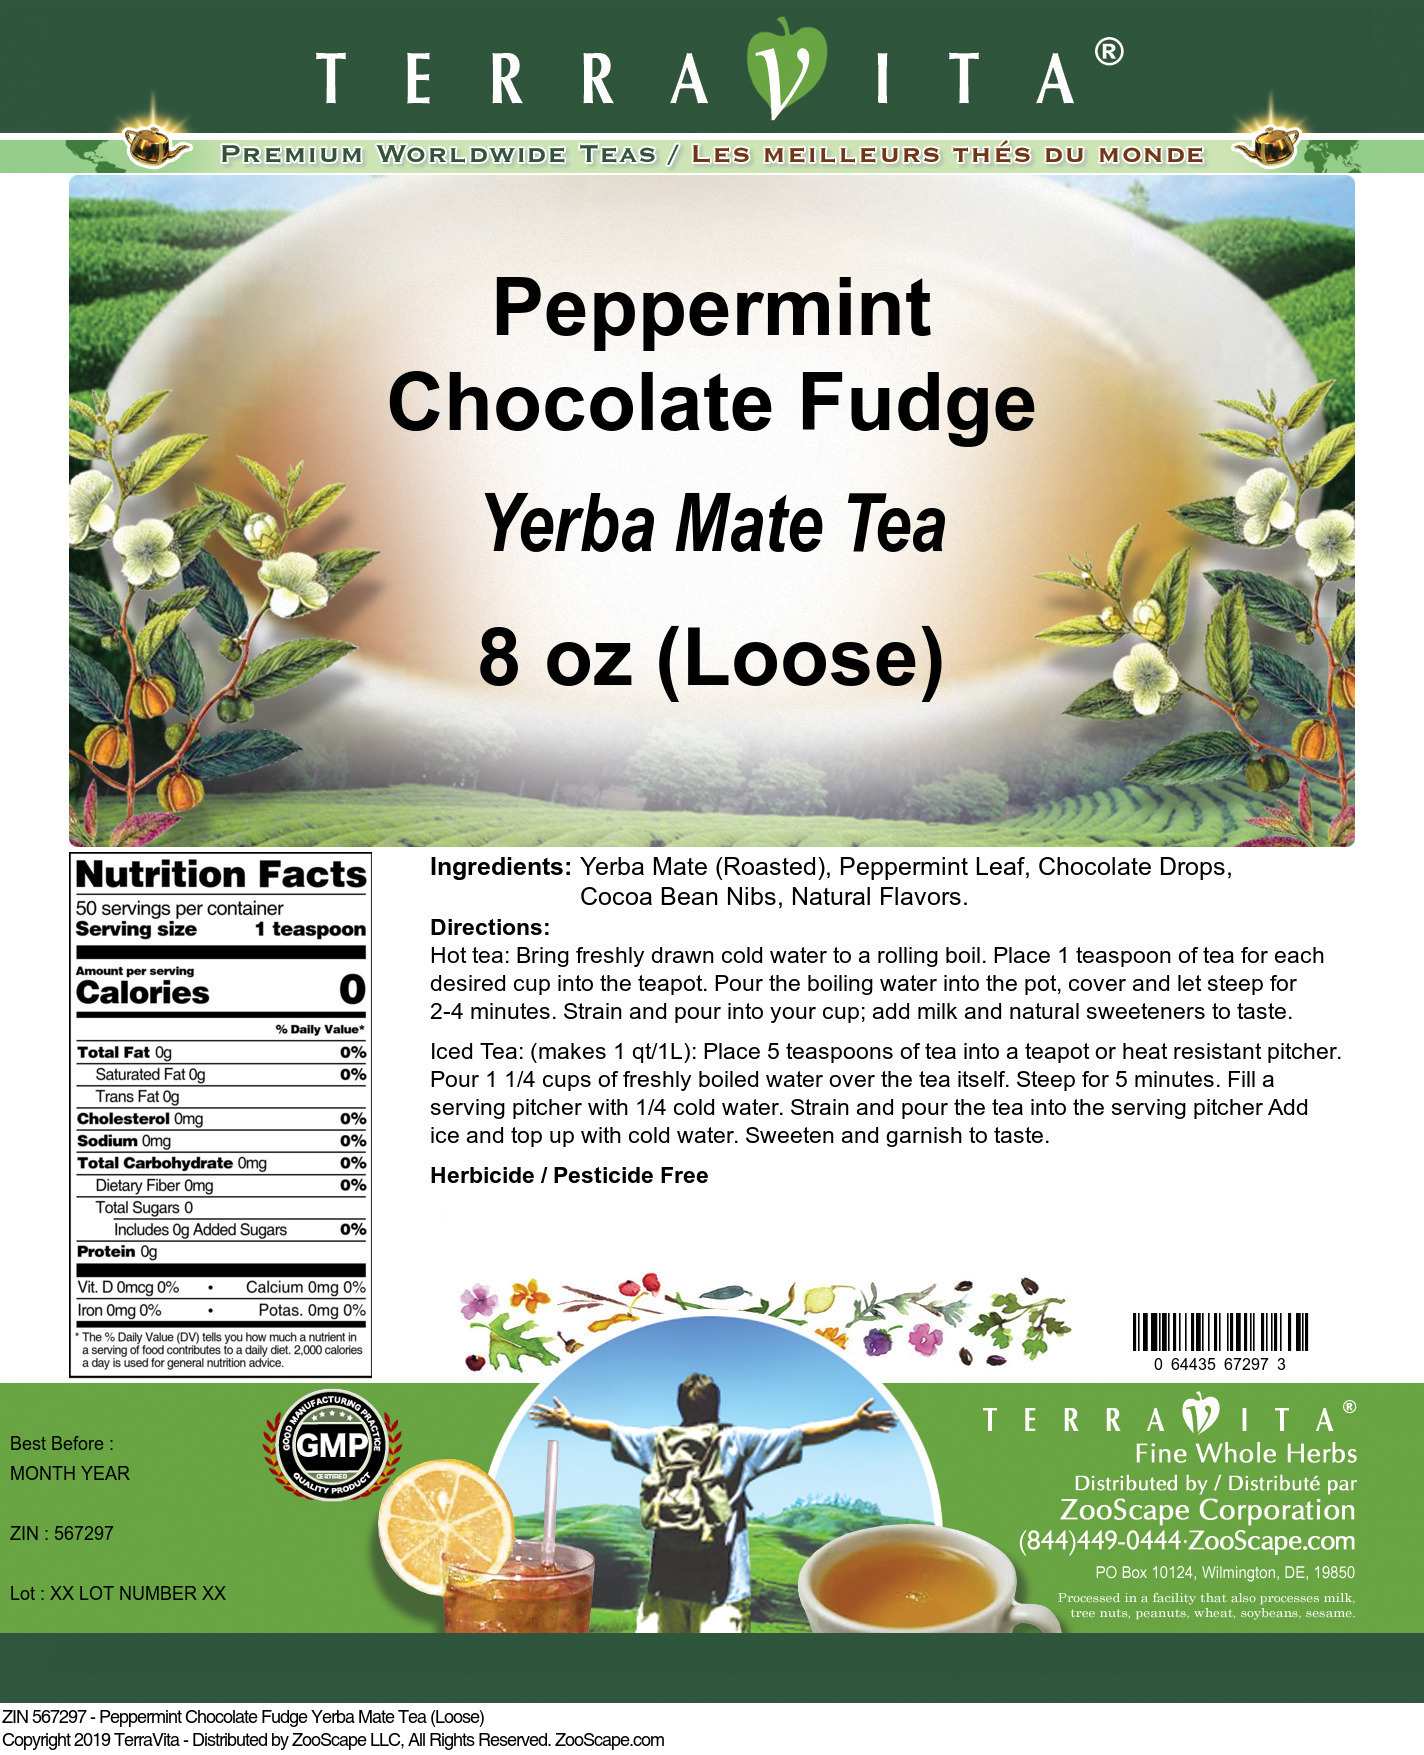 Peppermint Chocolate Fudge Yerba Mate Tea (Loose) - Label